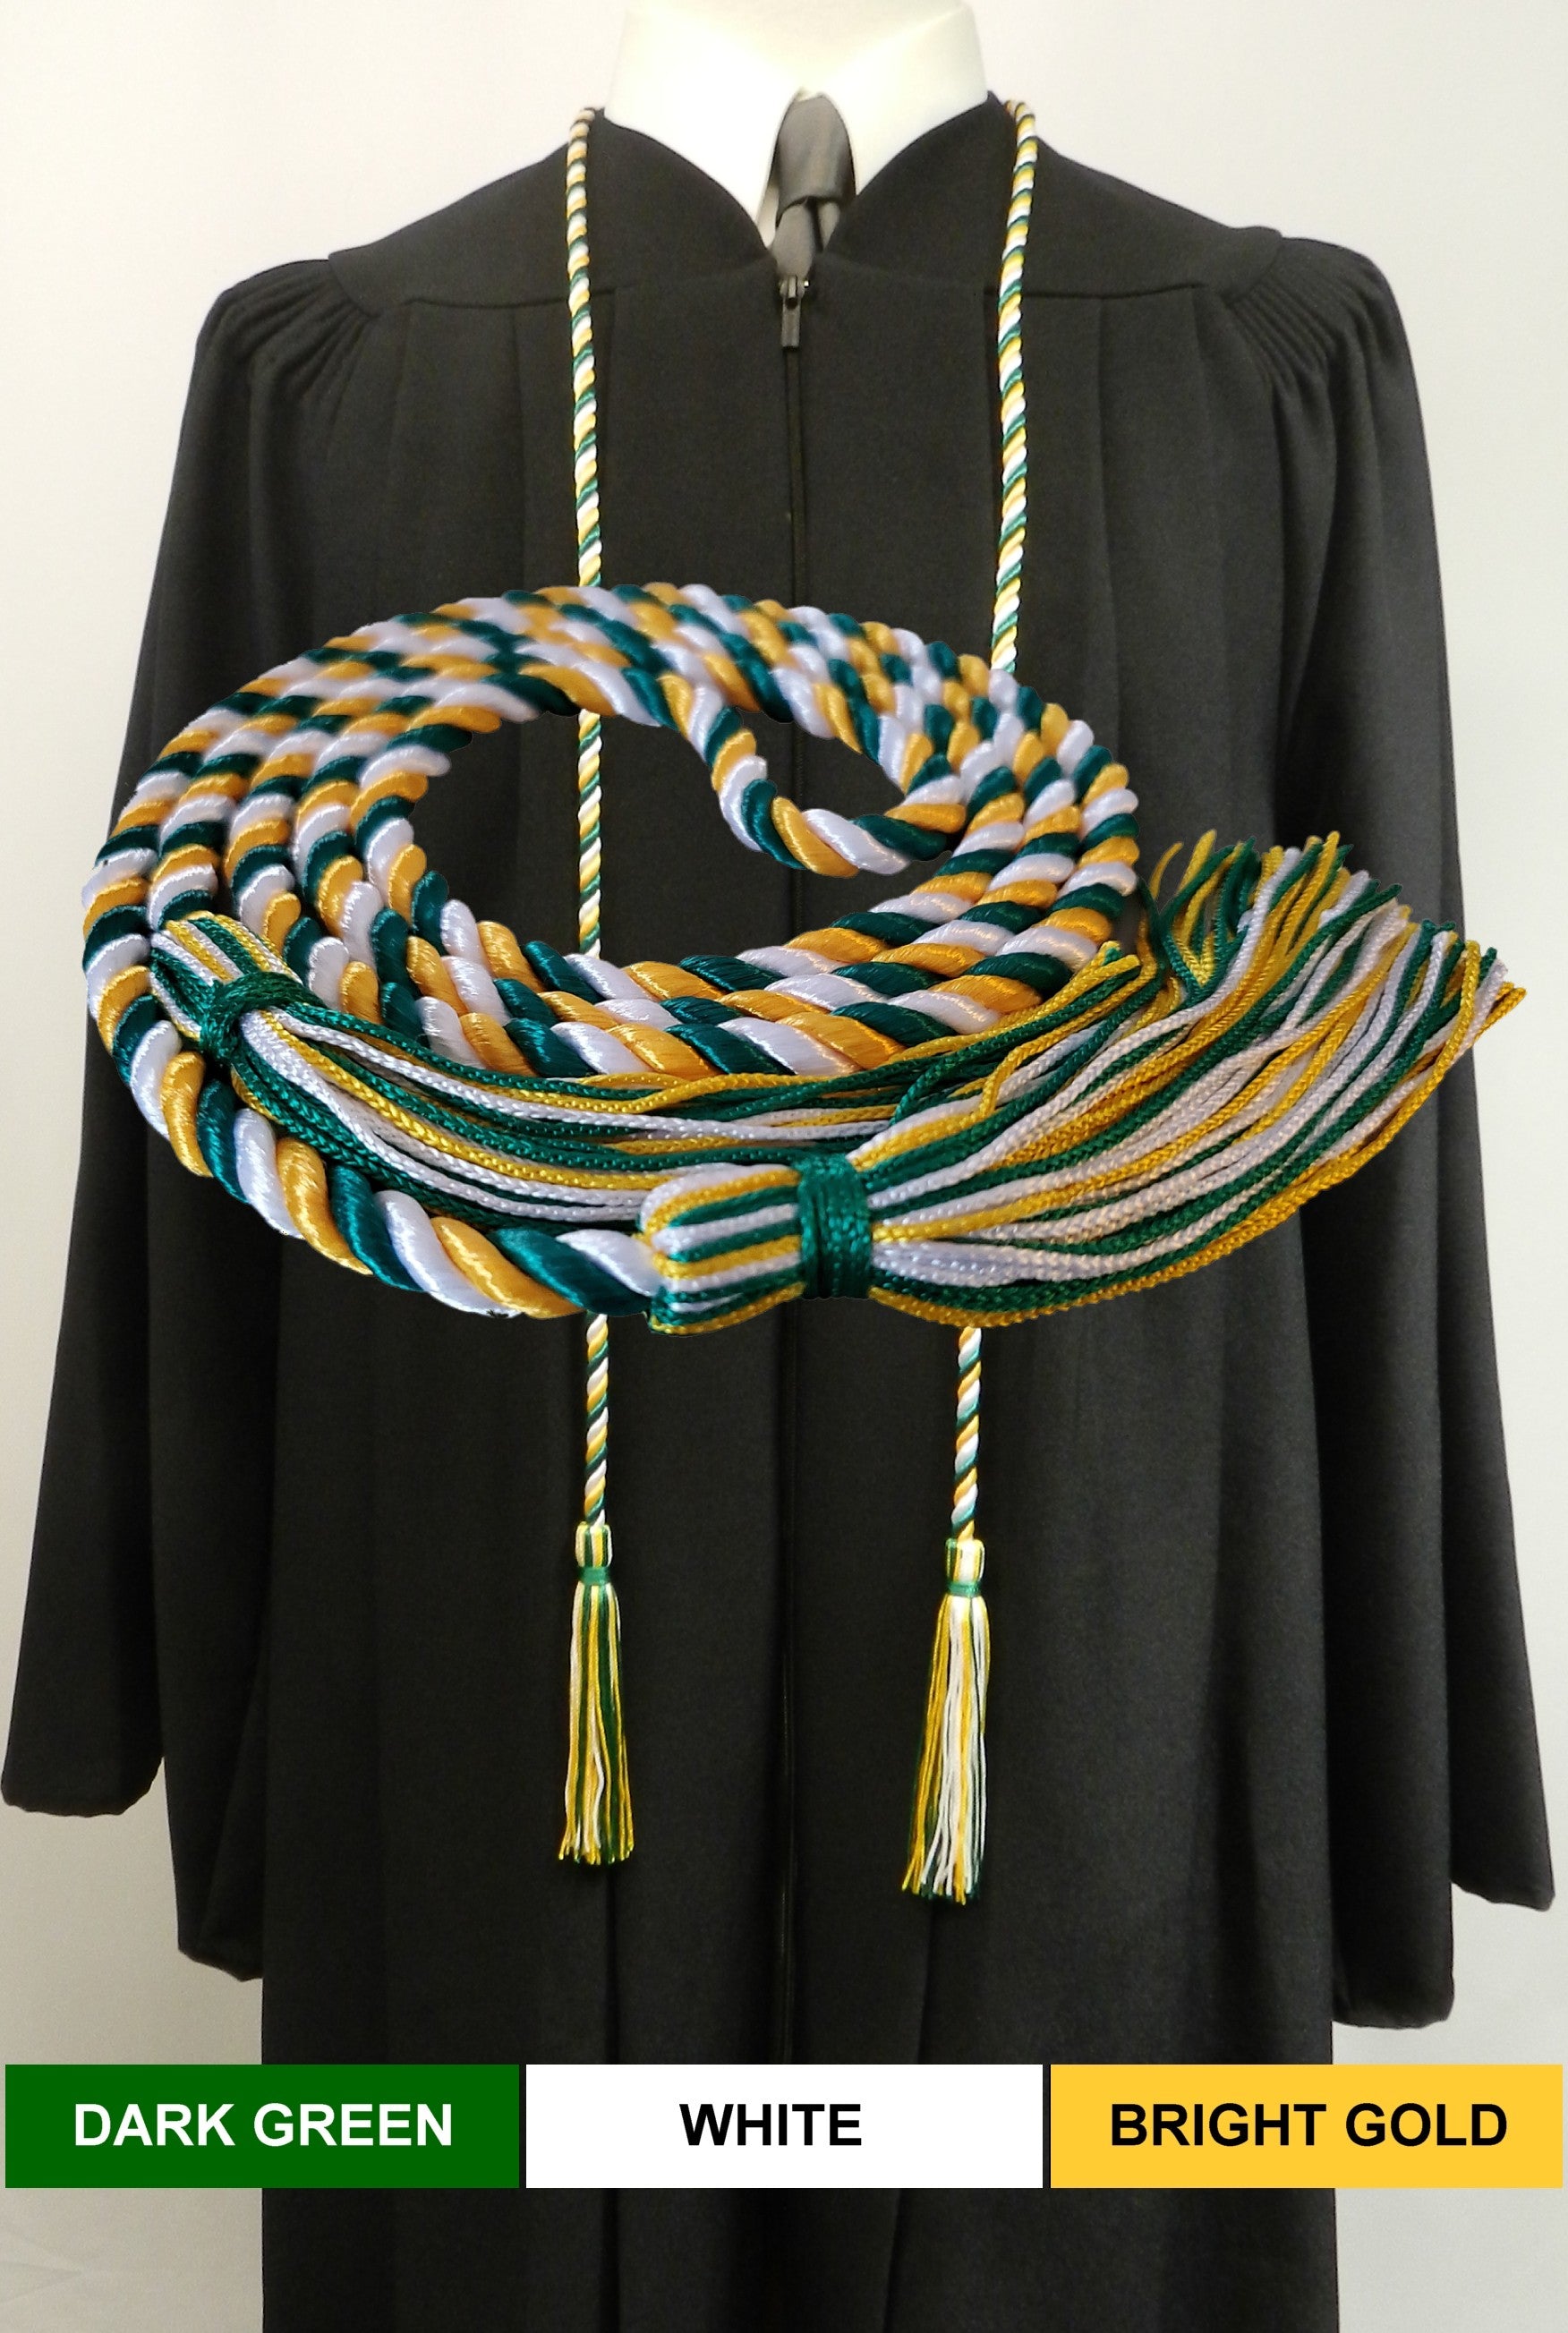 Honor Cords: Dark Green-White-Gold, Senior Class Graduation Products